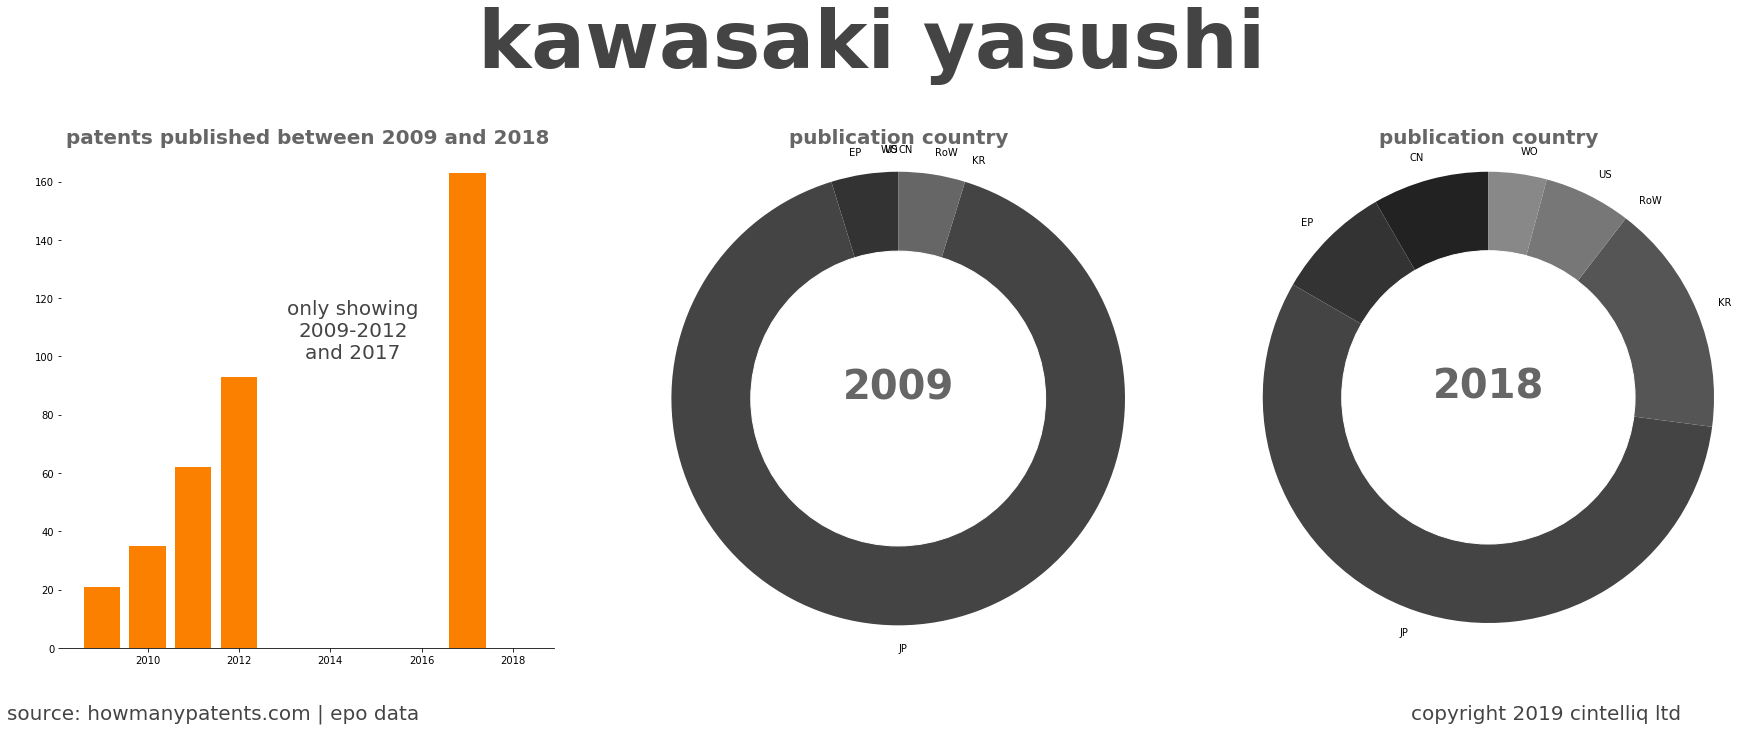 summary of patents for Kawasaki Yasushi